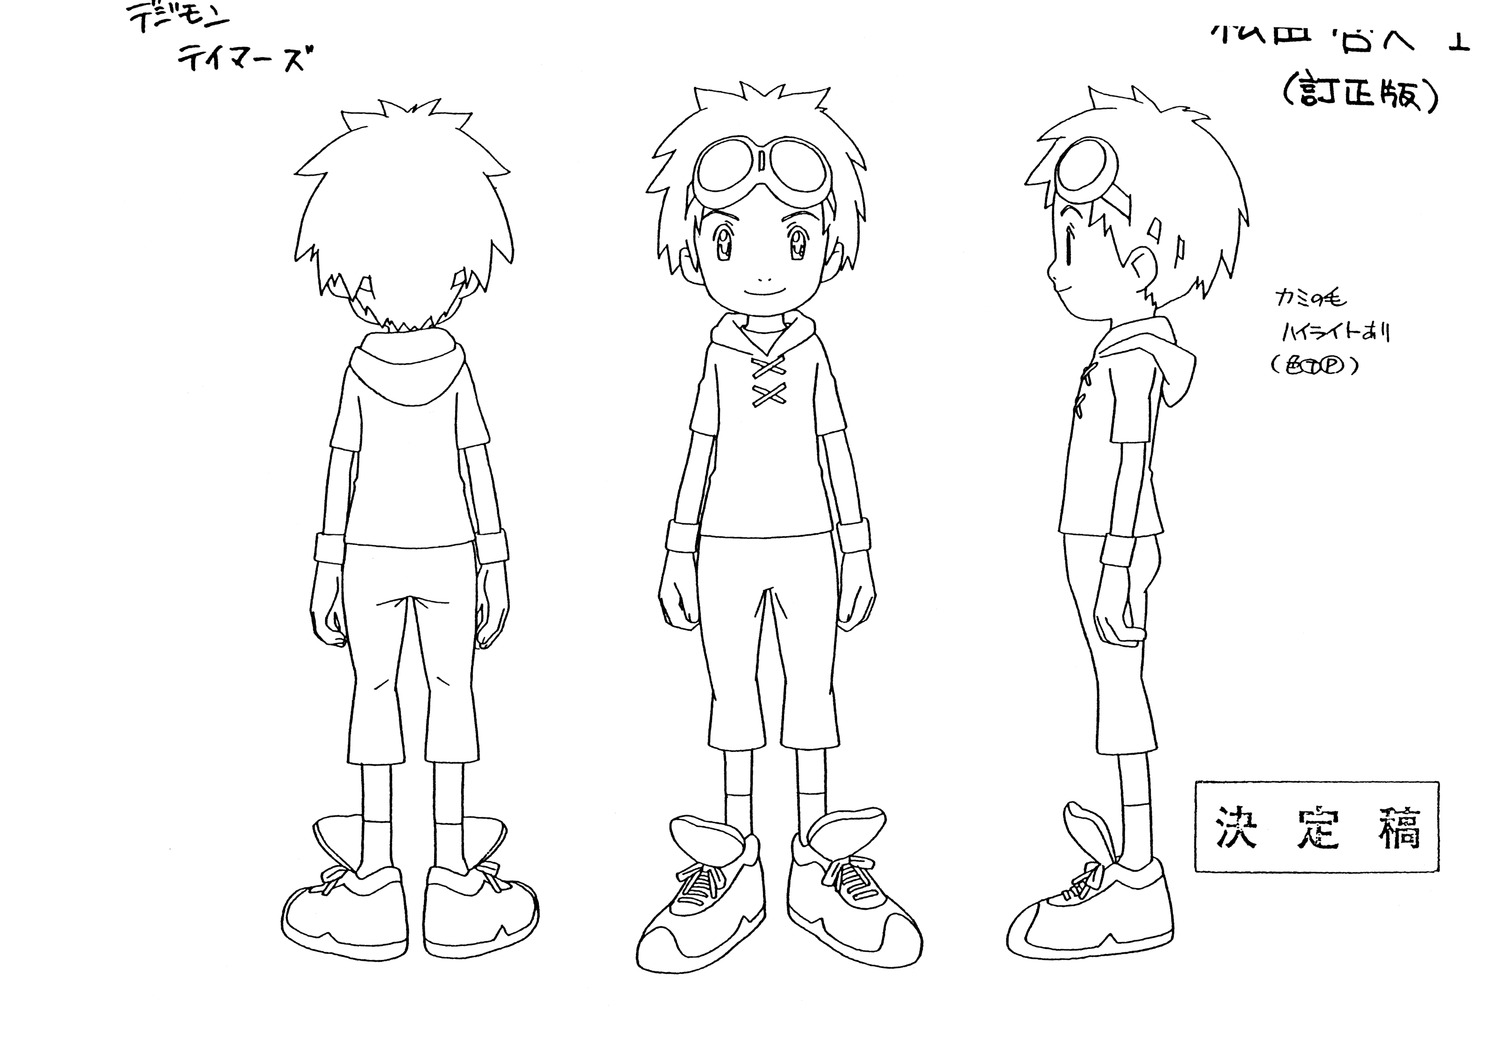 character_design digimon digimon_tamers katsuyoshi_nakatsuru production_materials settei